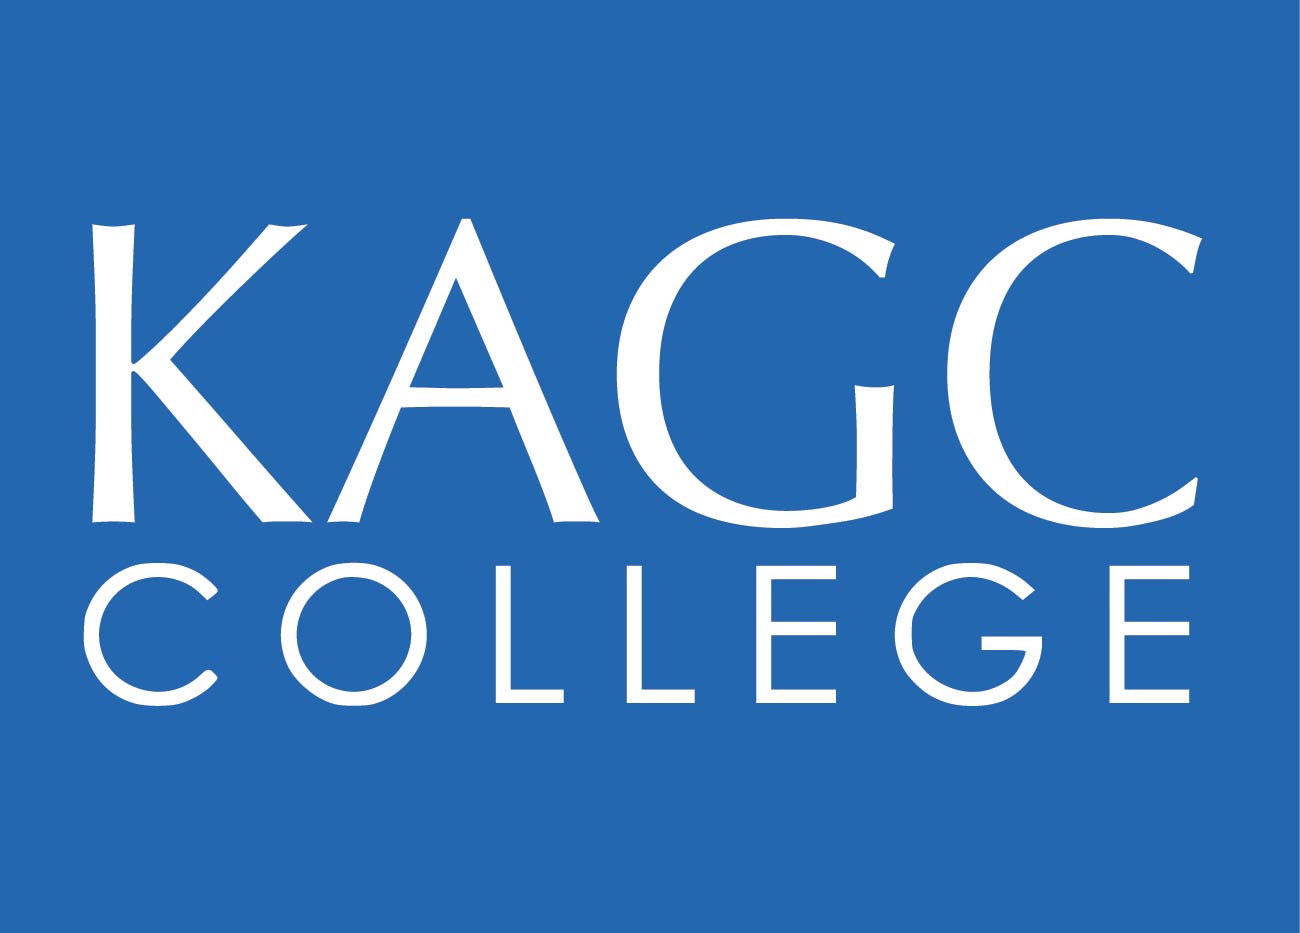 KAGC College